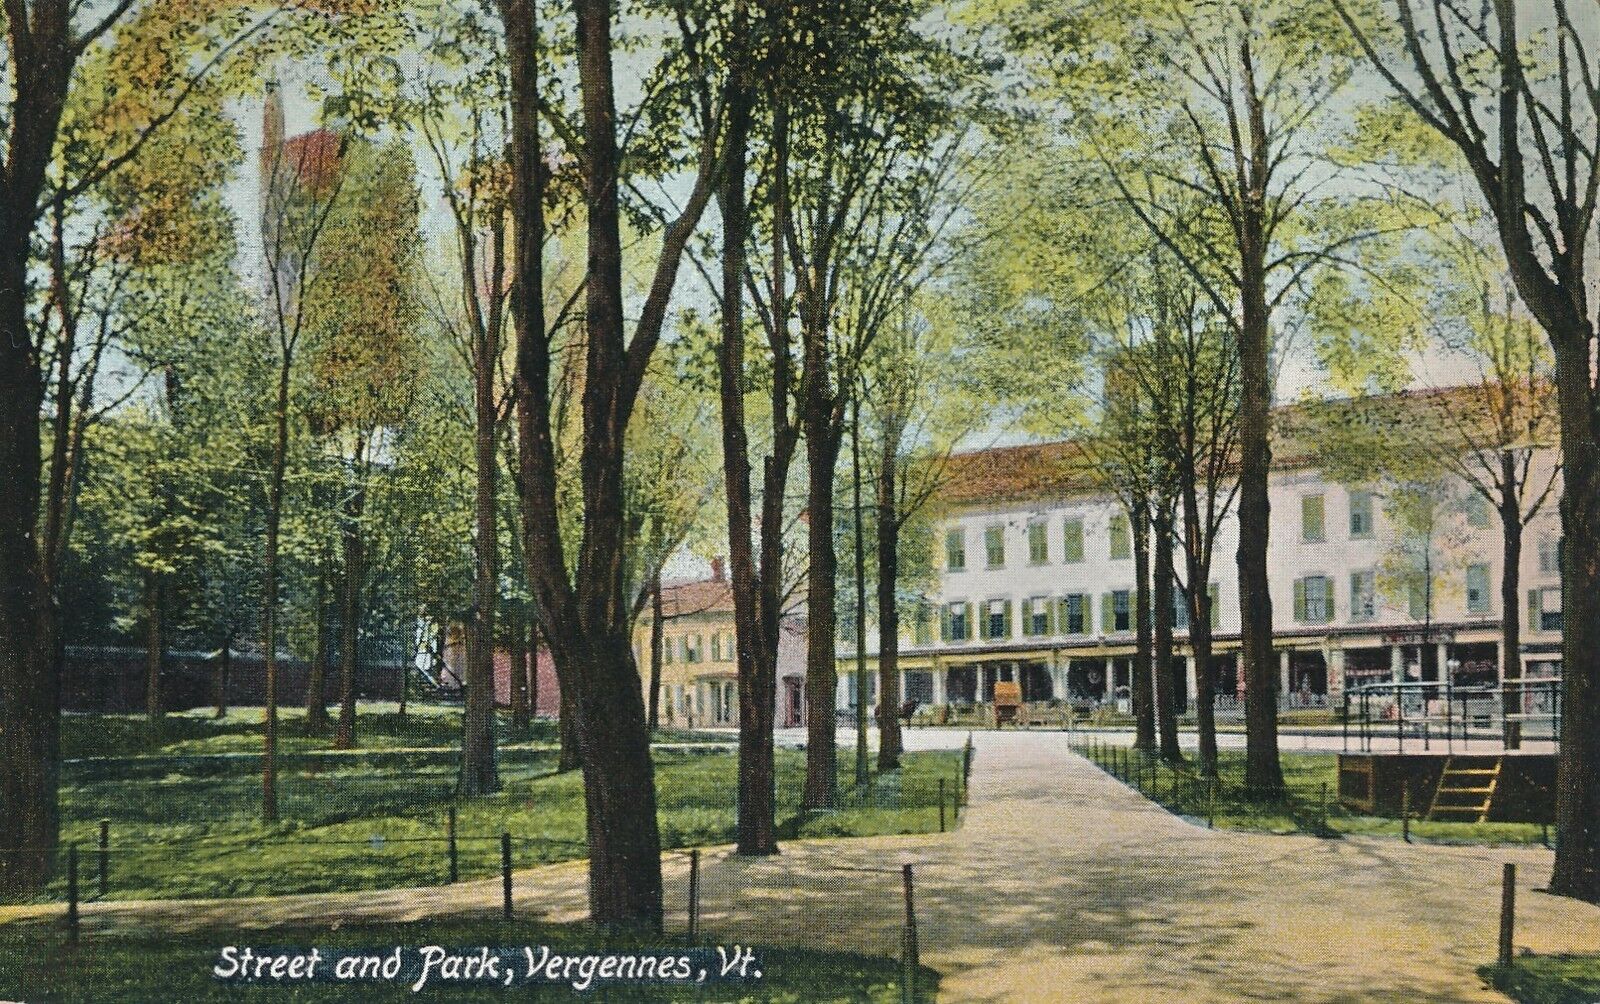 VERGENNES VT – Street and Park